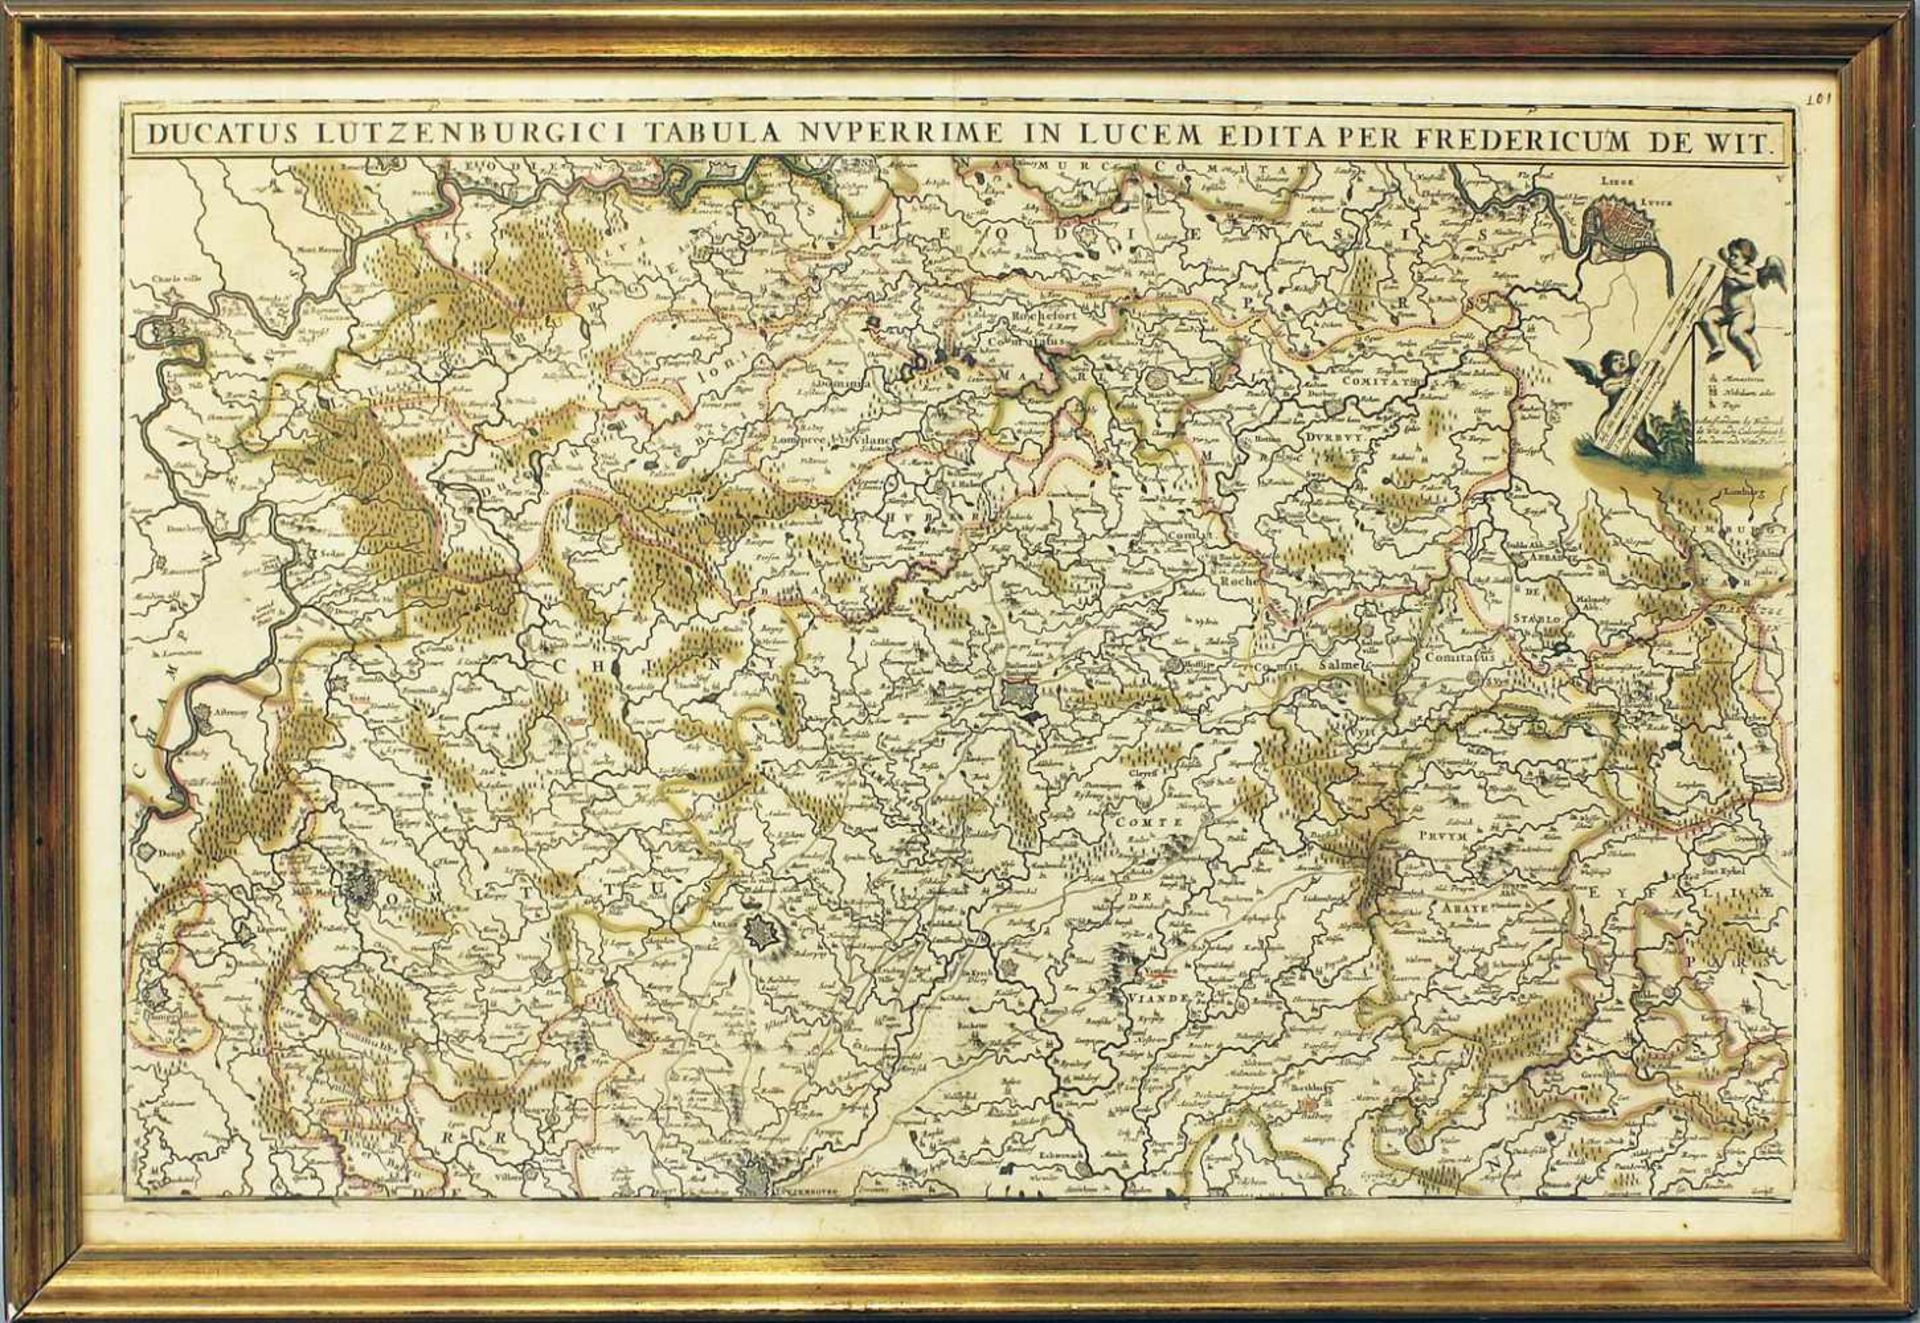 De Wit, Frederick (1629/31-1706)"Ducatus Lutzenburgici Tabula ...", so oberhalb der Karte